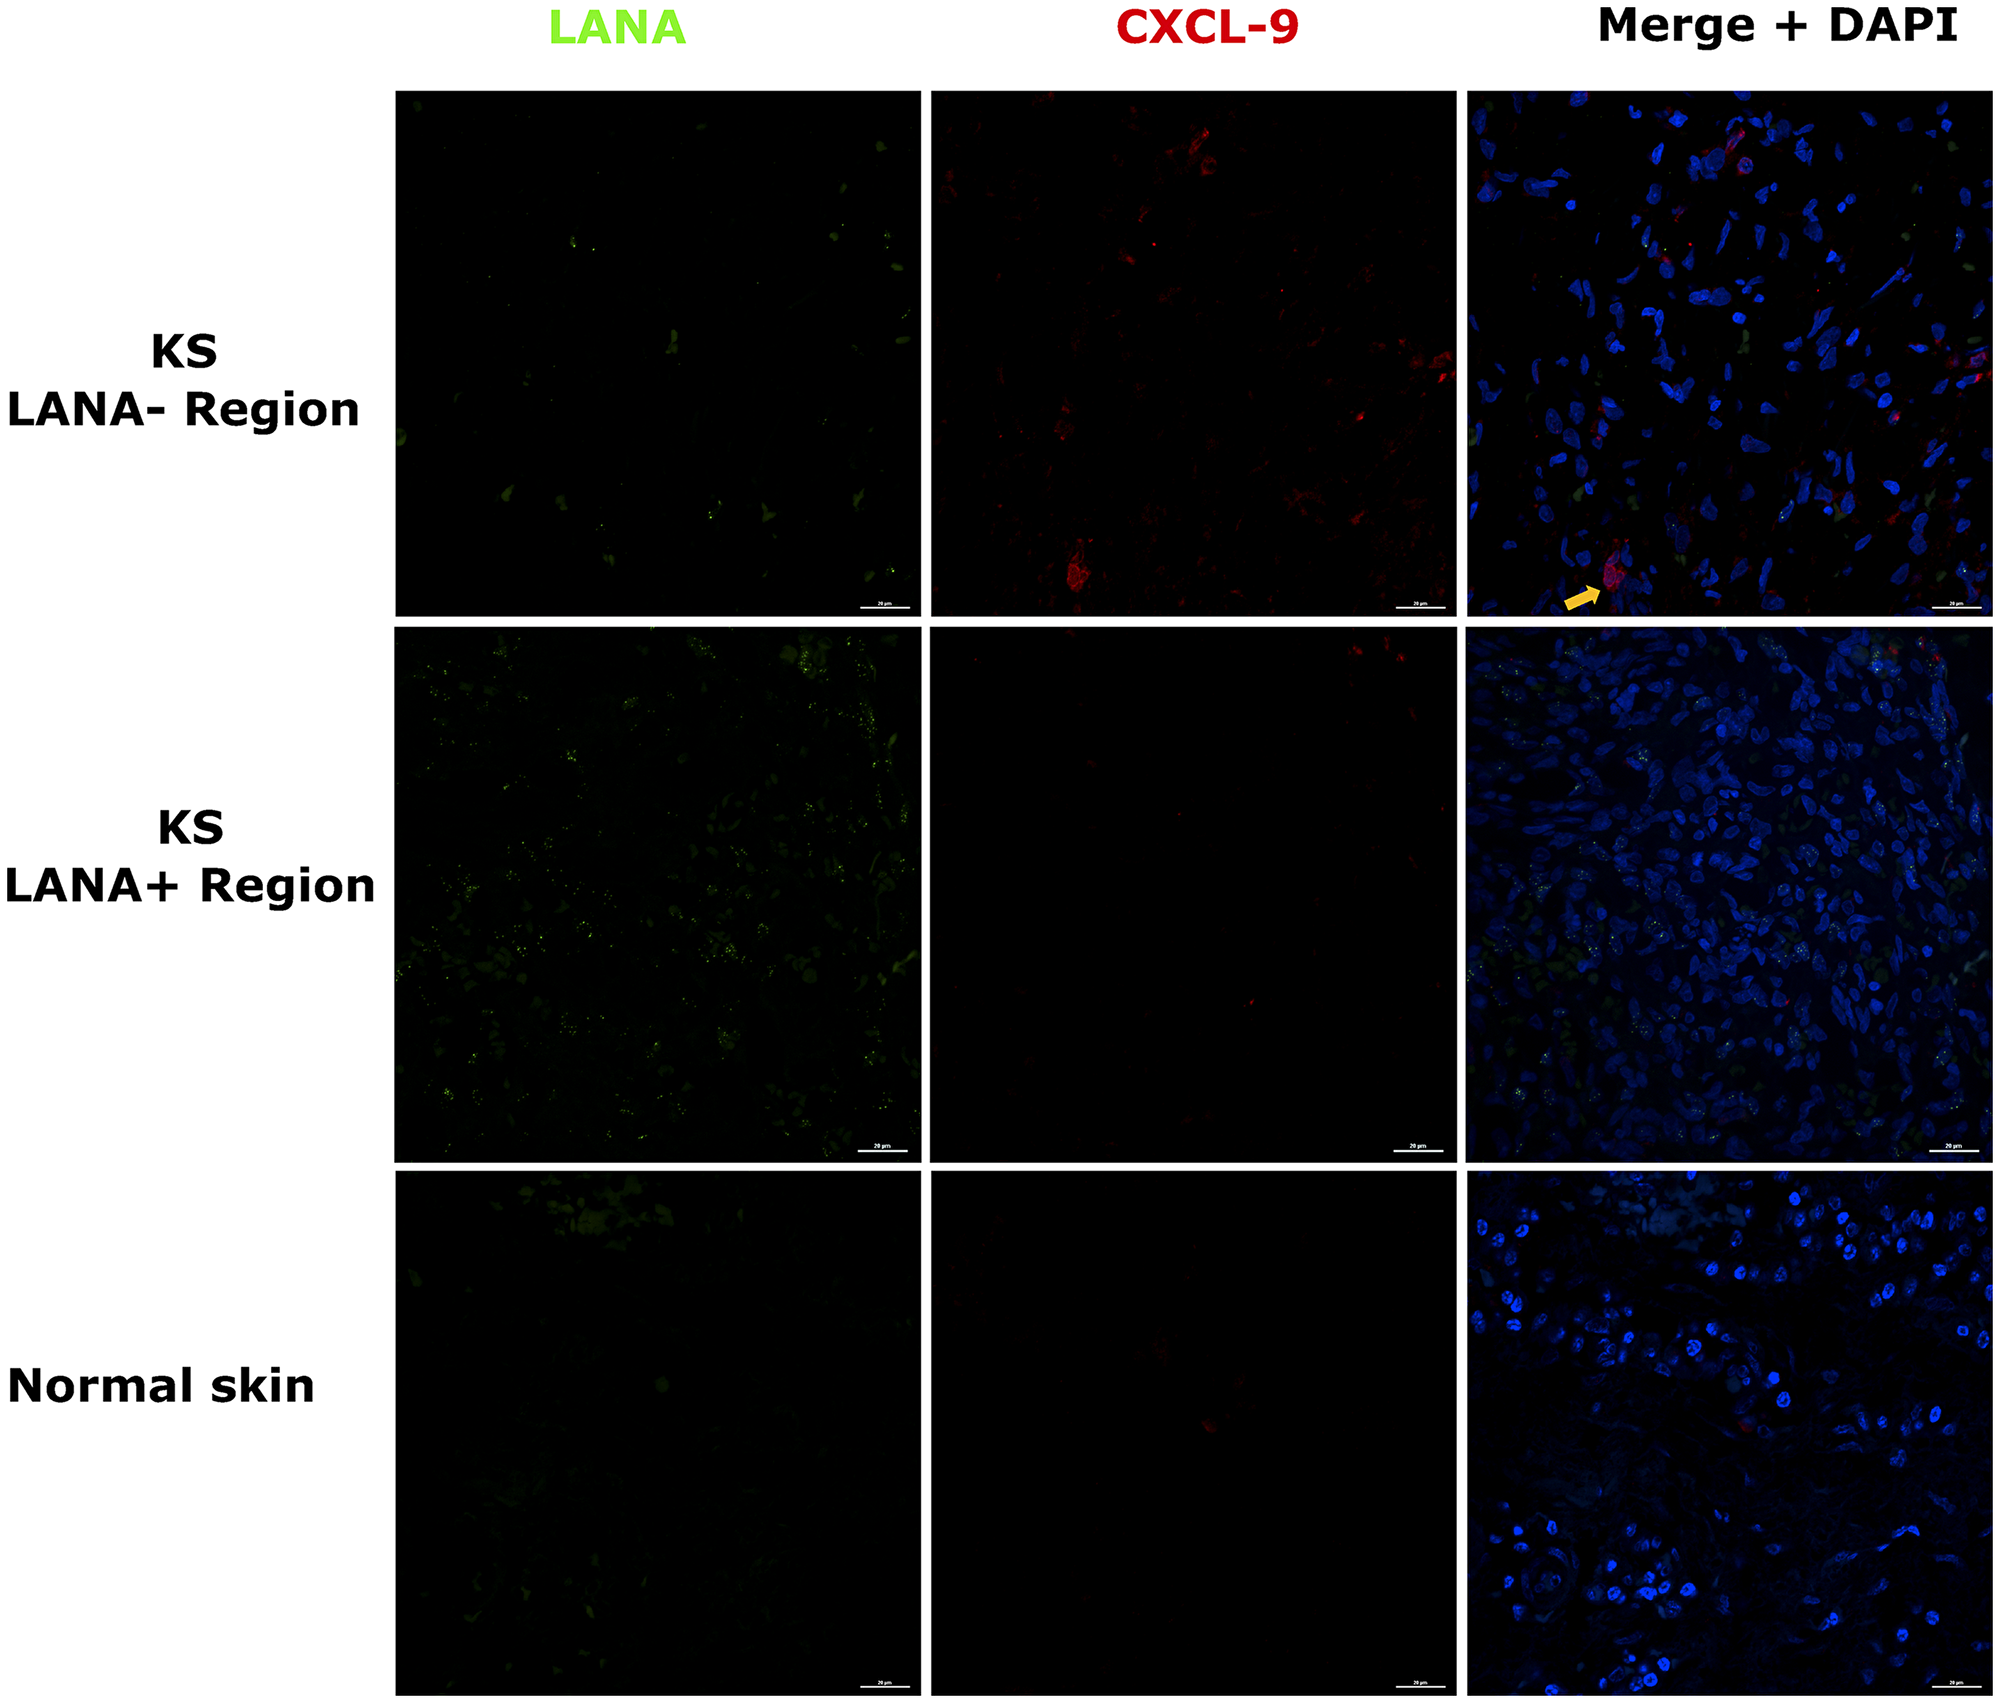 Dual-immunofluorescence staining of Kaposi’s sarcoma-associated Herpesvirus (KSHV) Latency Associated Nuclear Antigen (LANA) protein and C-X-C Motif Chemokine Ligand 9 (CxCL-9) on Kaposi’s Sarcoma (KS) tissues ID-C3057 (LANA+ and LANA- regions) and normal skin ID-21650.